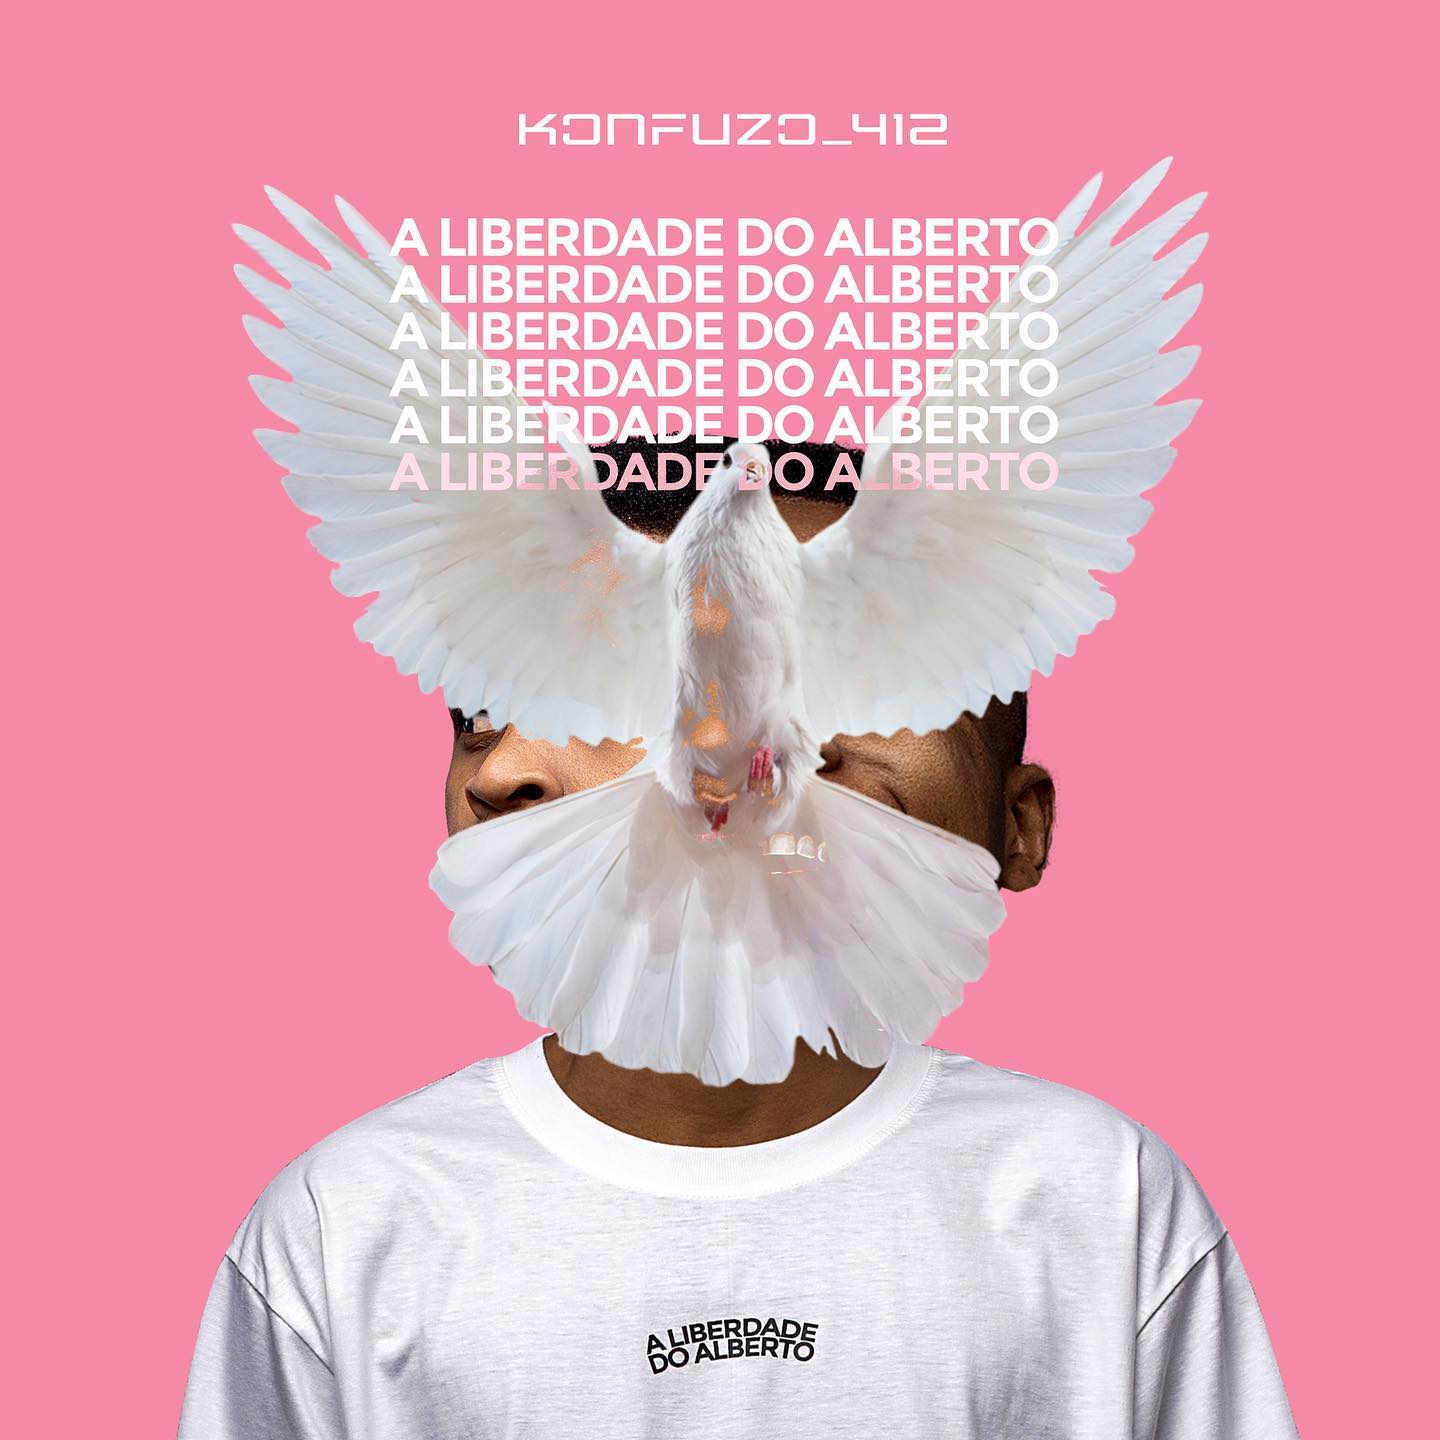 Konfuzo_412 – A Liberdade Do Alberto (Album)